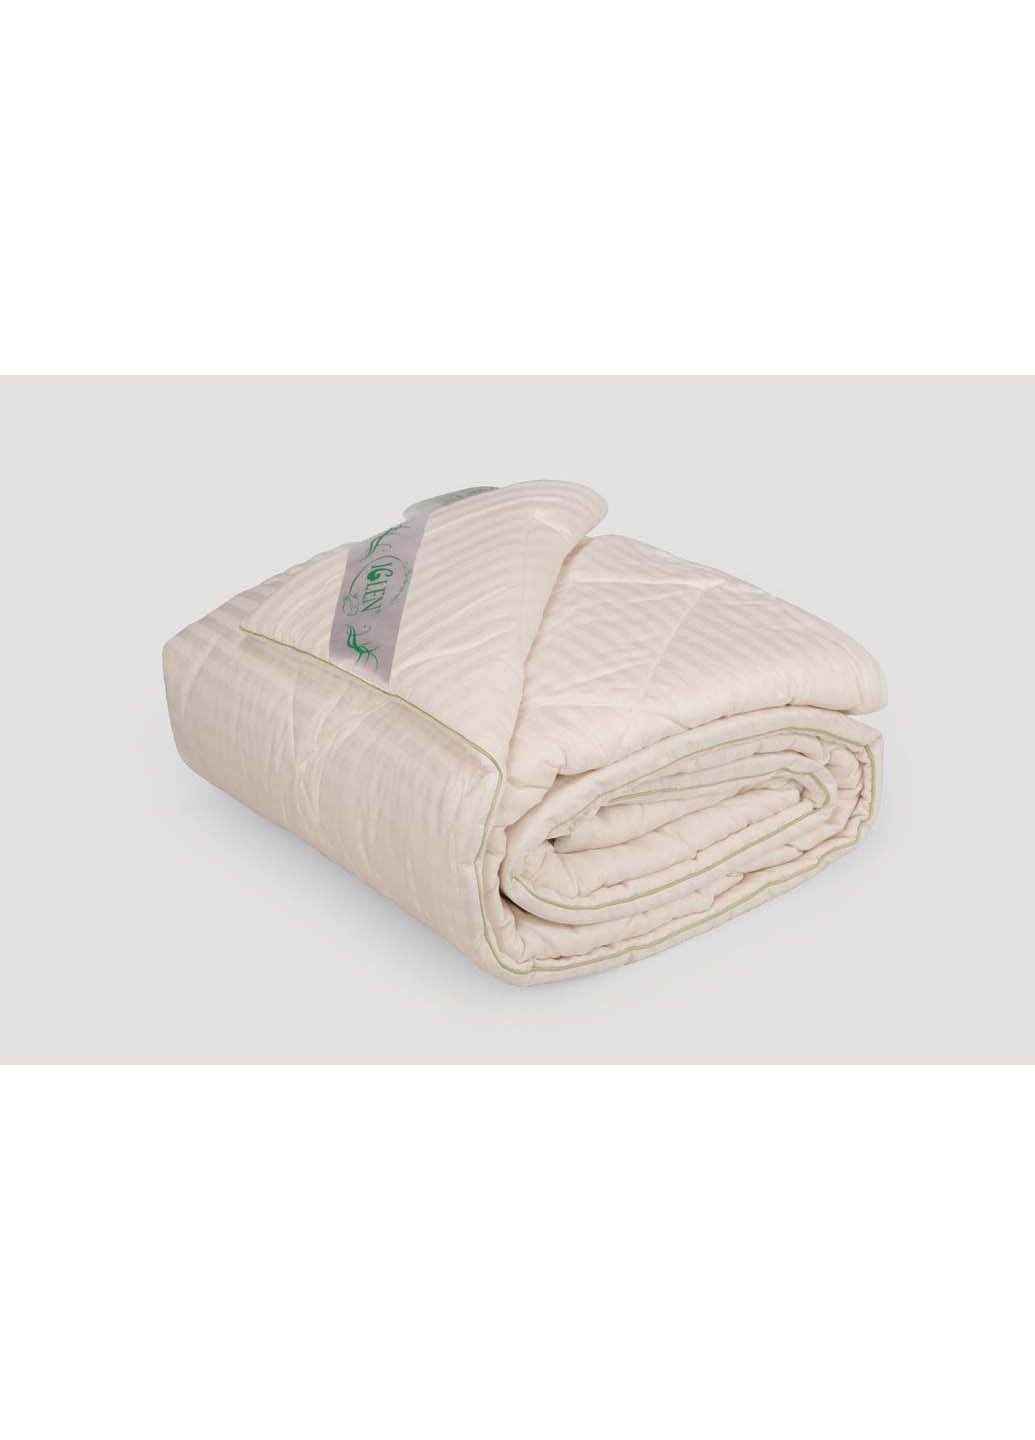 Одеяло из хлопка в жаккардовом сатине летнее 220х240 см Iglen (255722106)